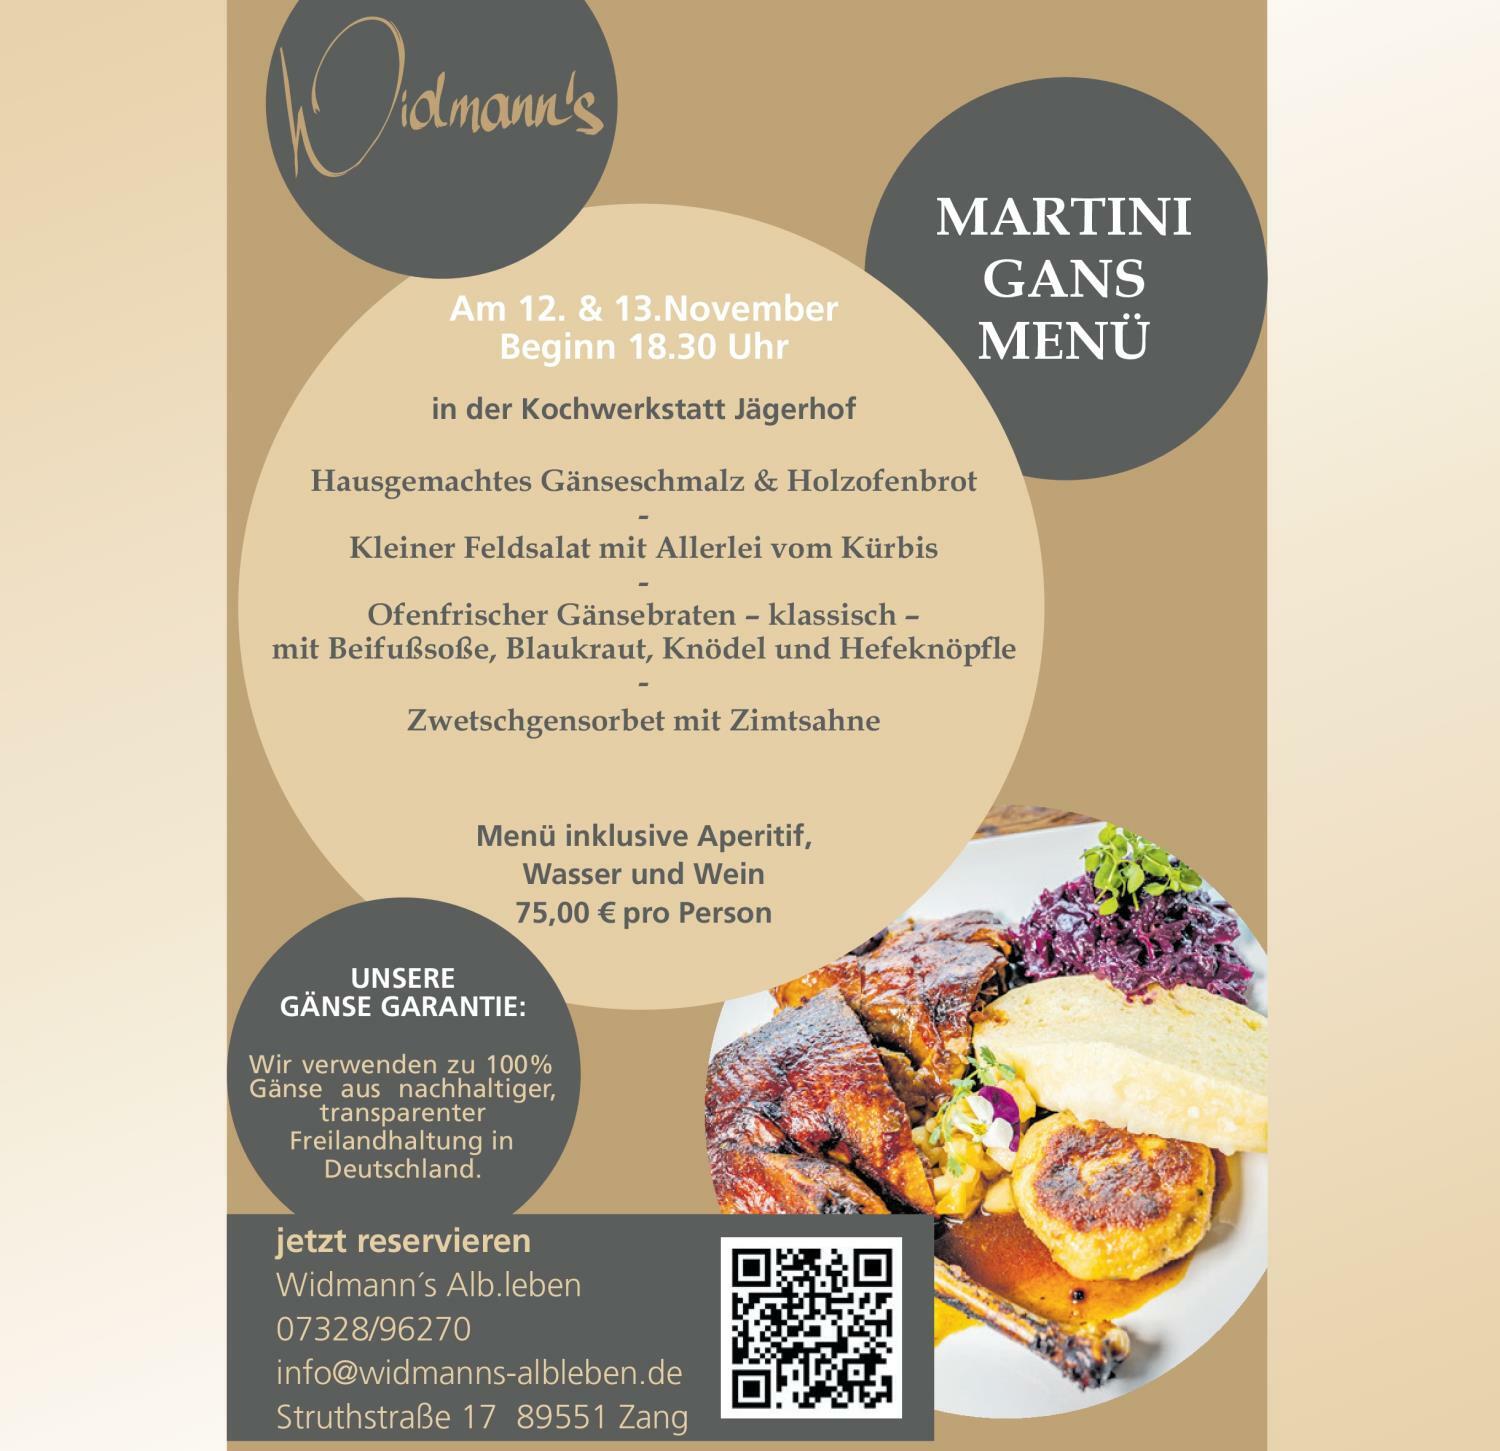 Martini Gans Menü